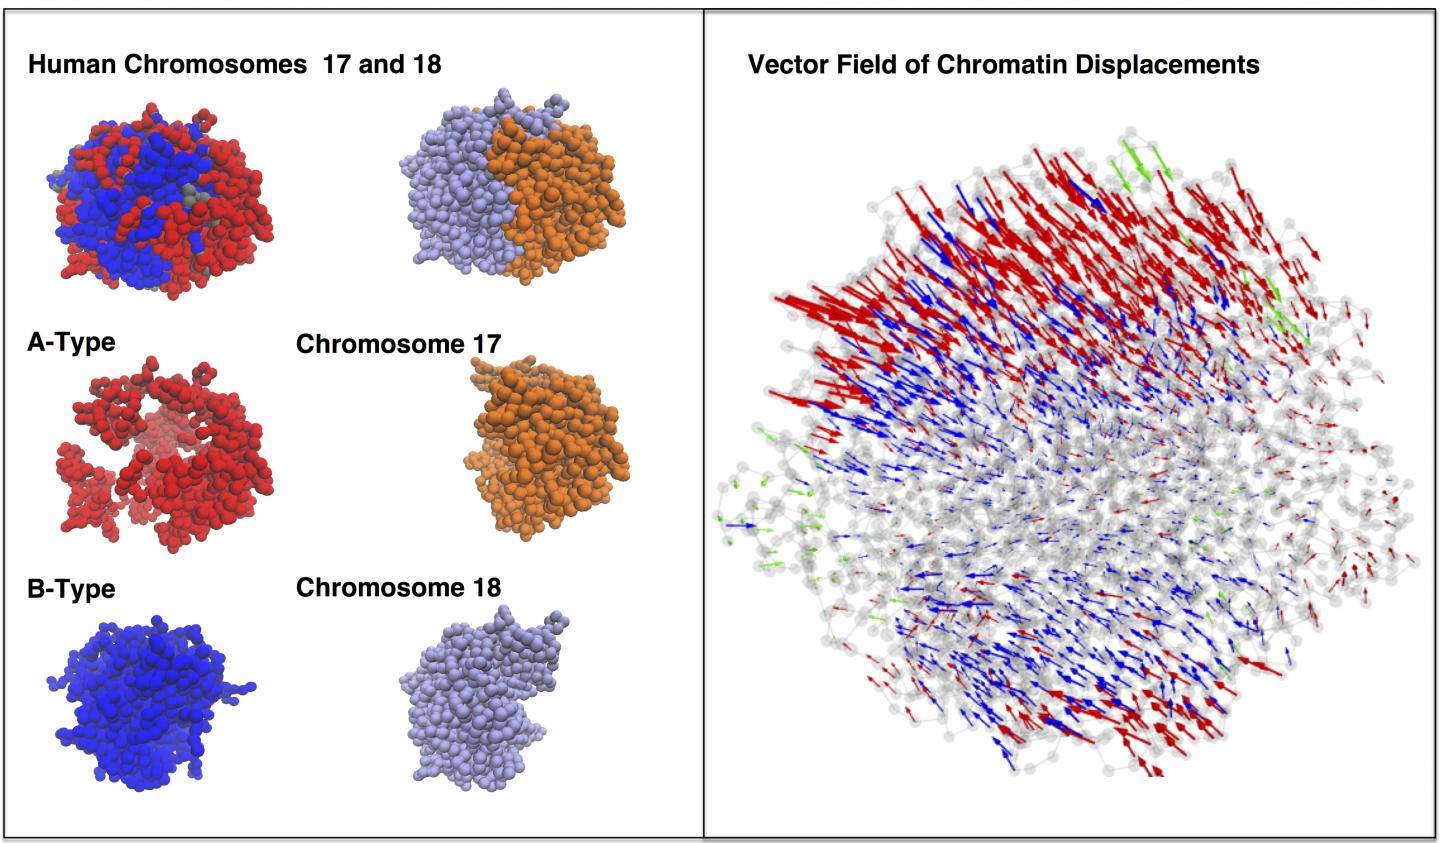 Chromosomes 17 and 18